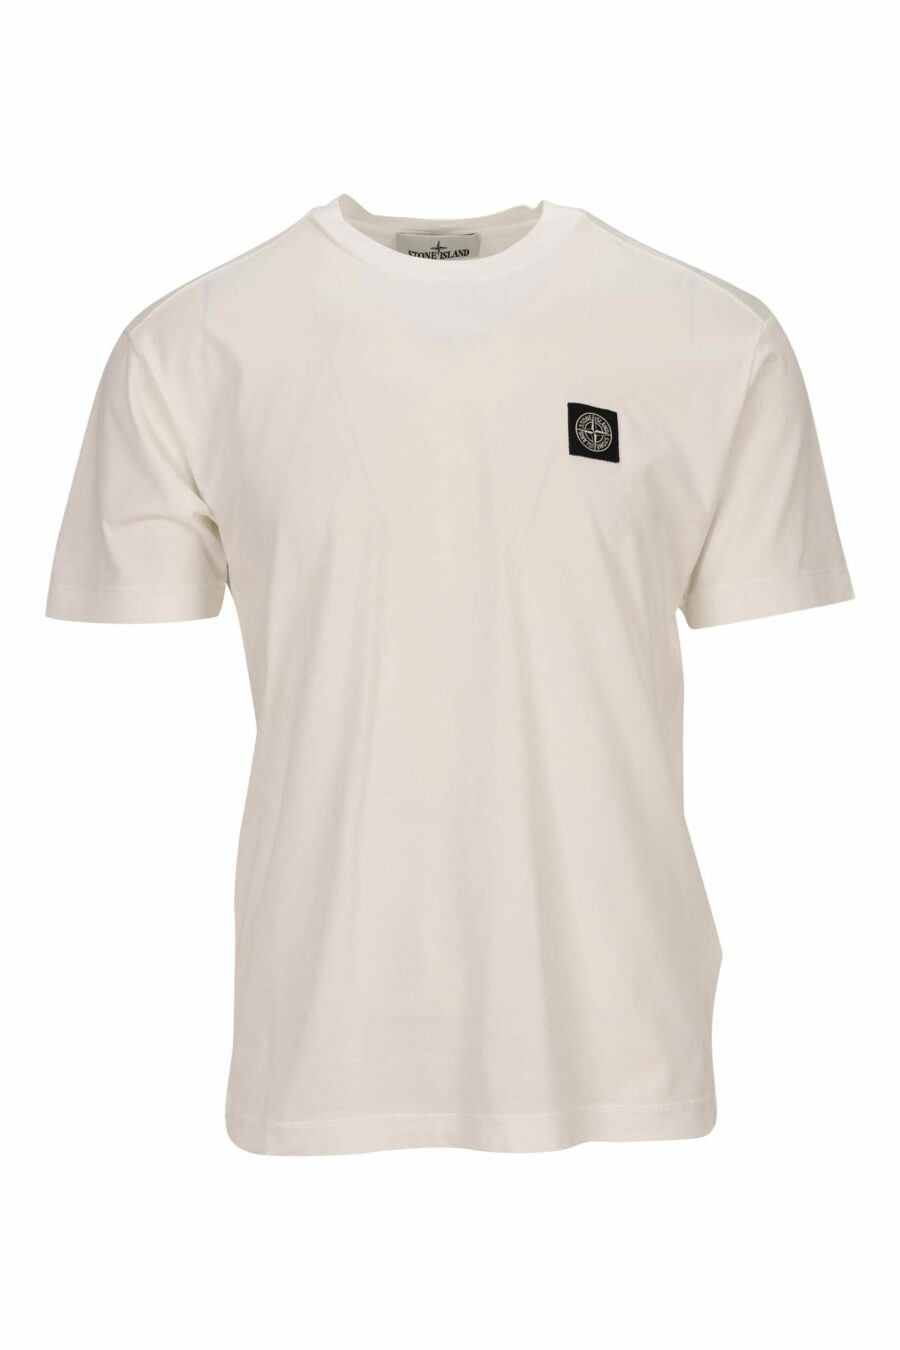 Weißes T-Shirt mit Mini-Logo-Kompass-Aufnäher - 8052572855146 skaliert